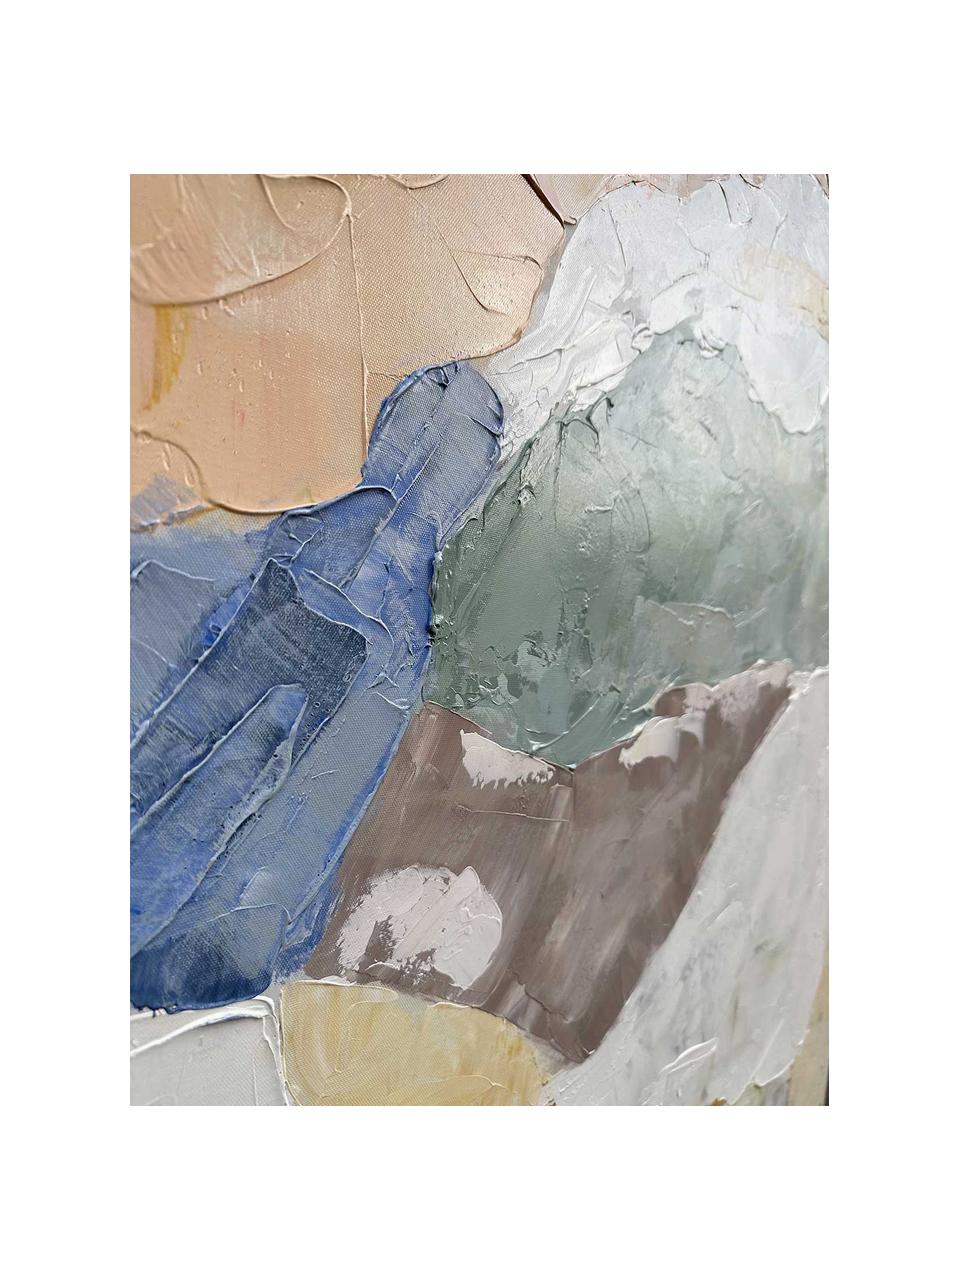 Lienzo pintado a mano Nubi Pastello, Multicolor, An 150 x Al 120 cm